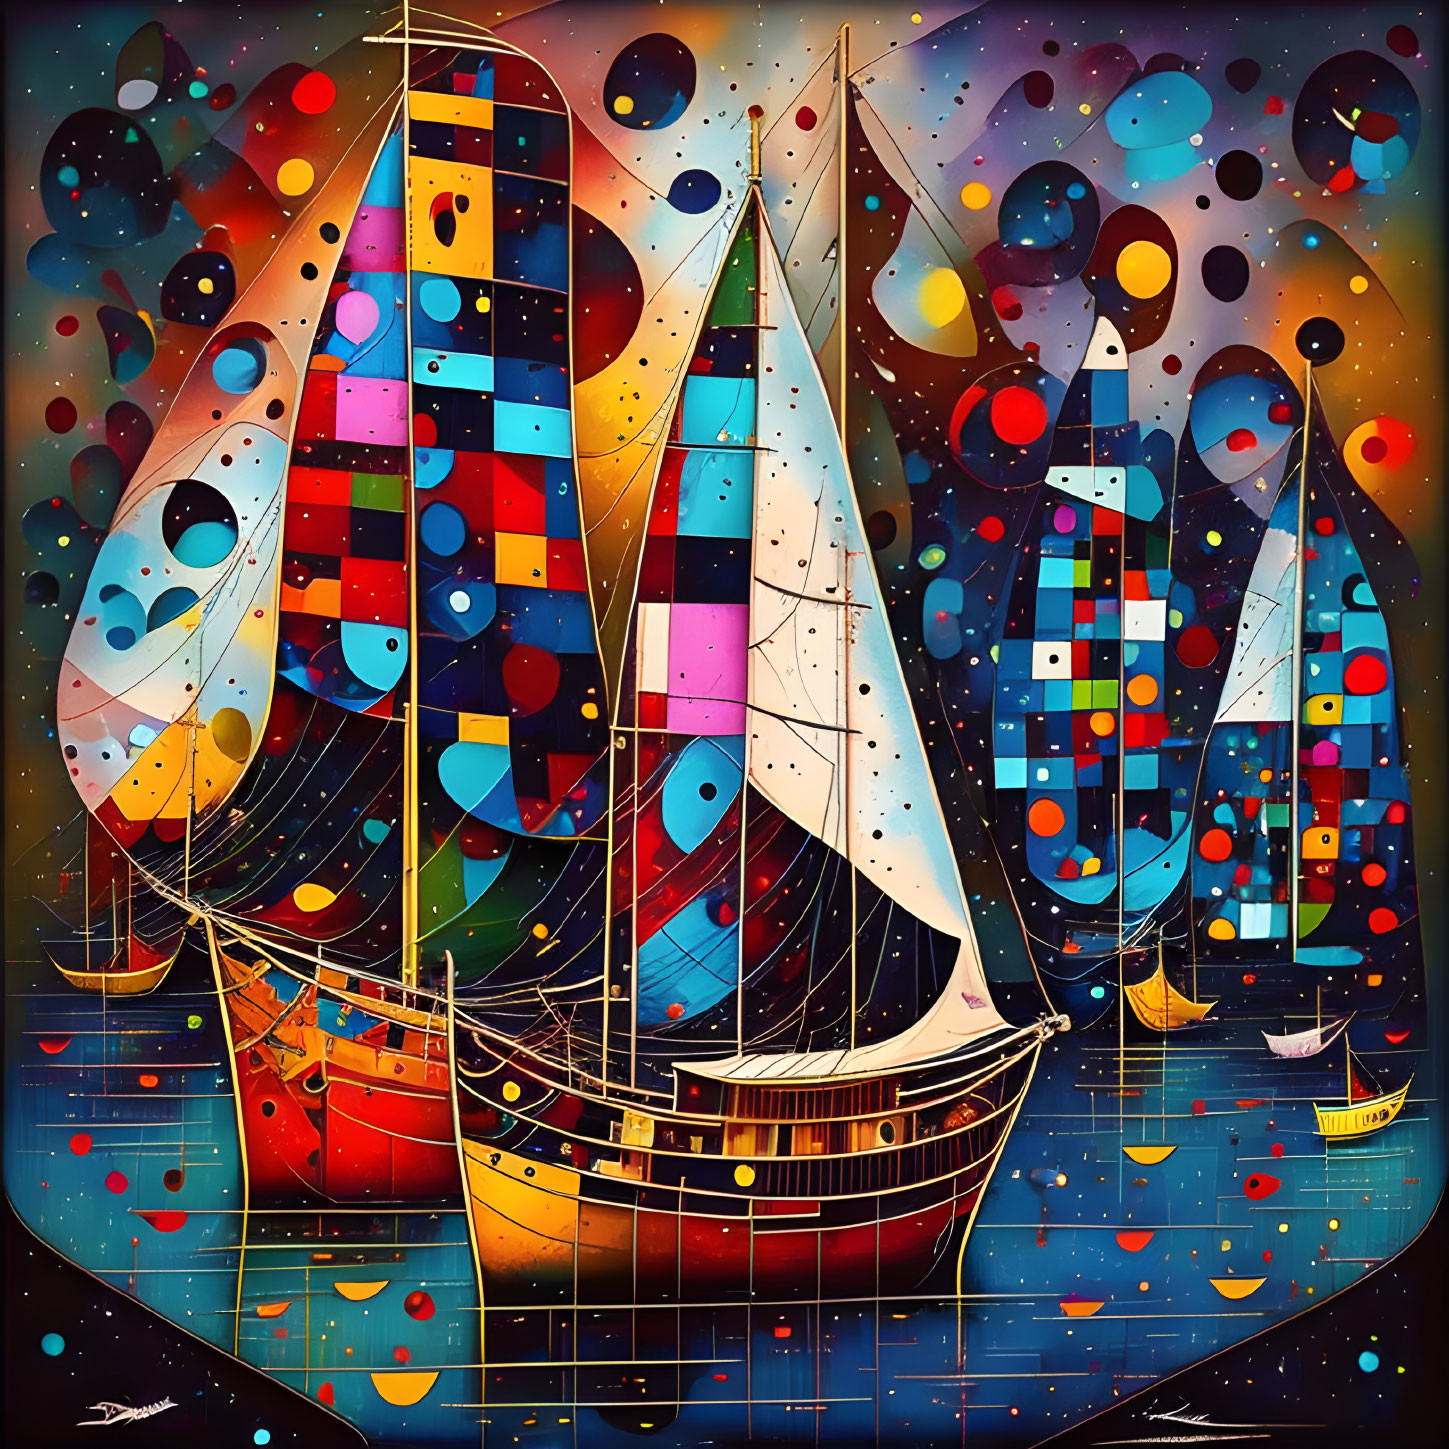 Vibrant abstract sailboat art on sea with night sky circles & stars